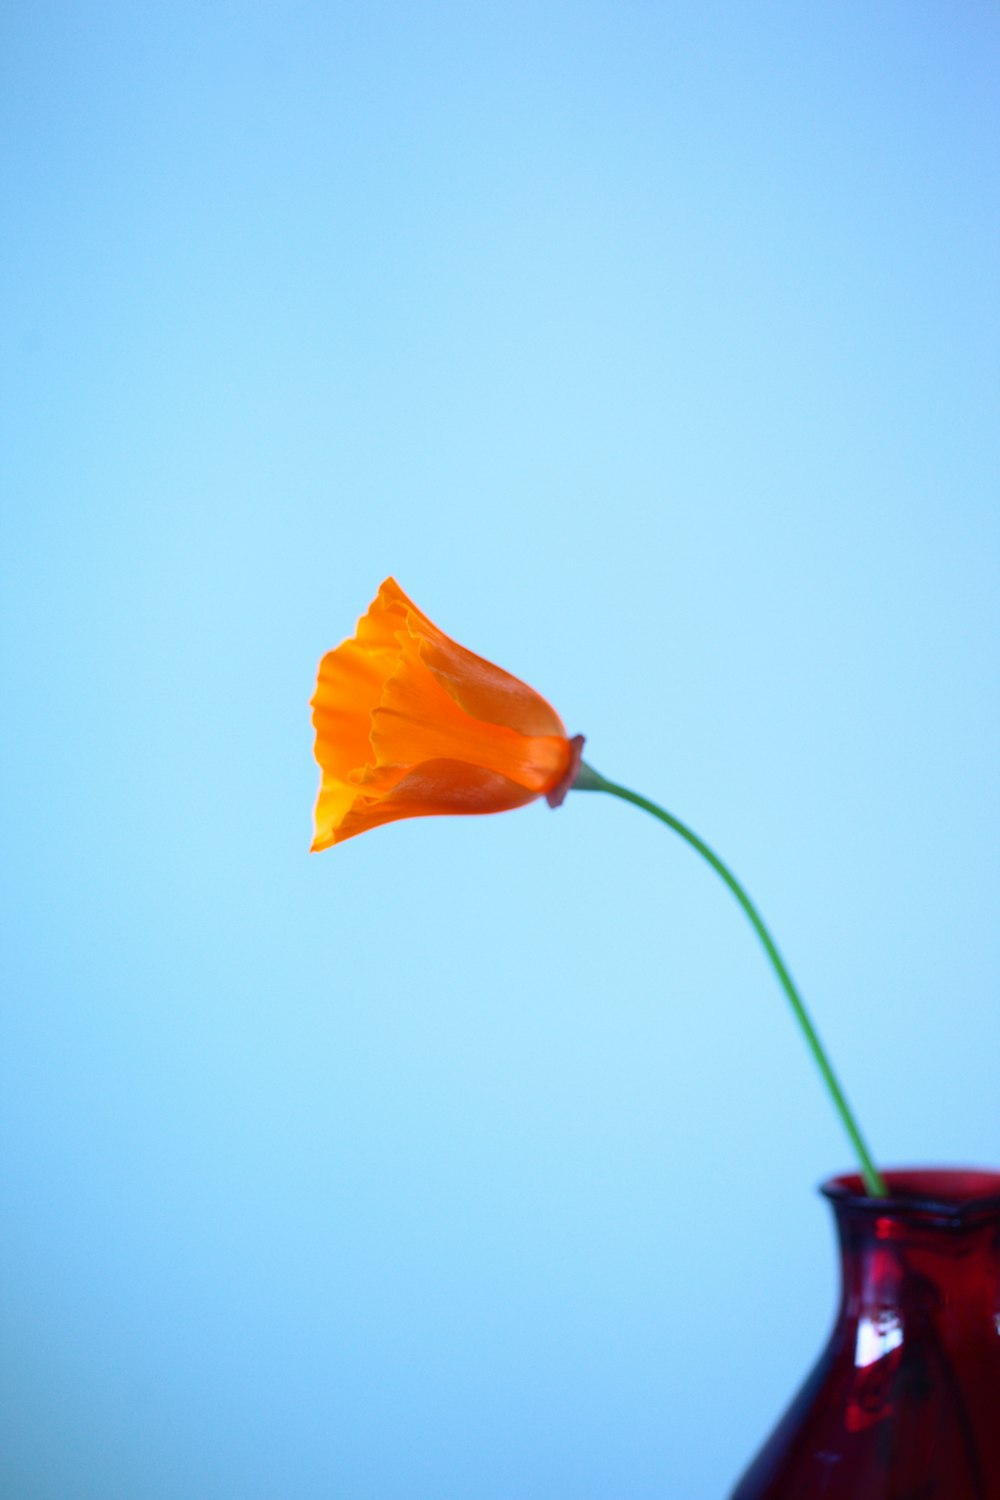 flor de laranja no vaso vermelho